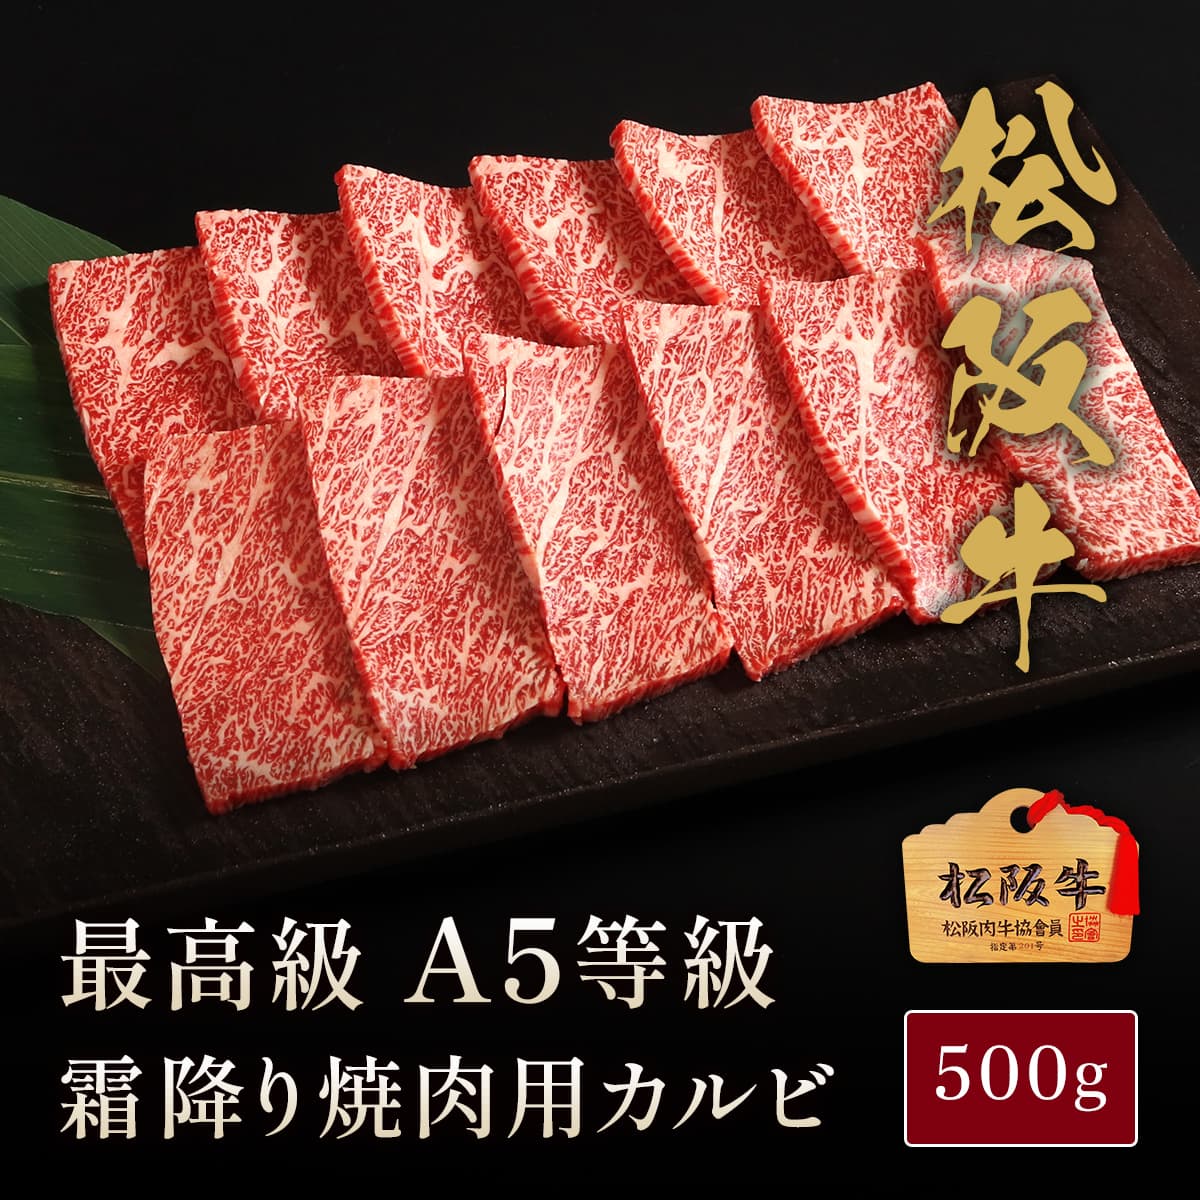 松阪牛 A5等級 焼肉 カルビ 500g